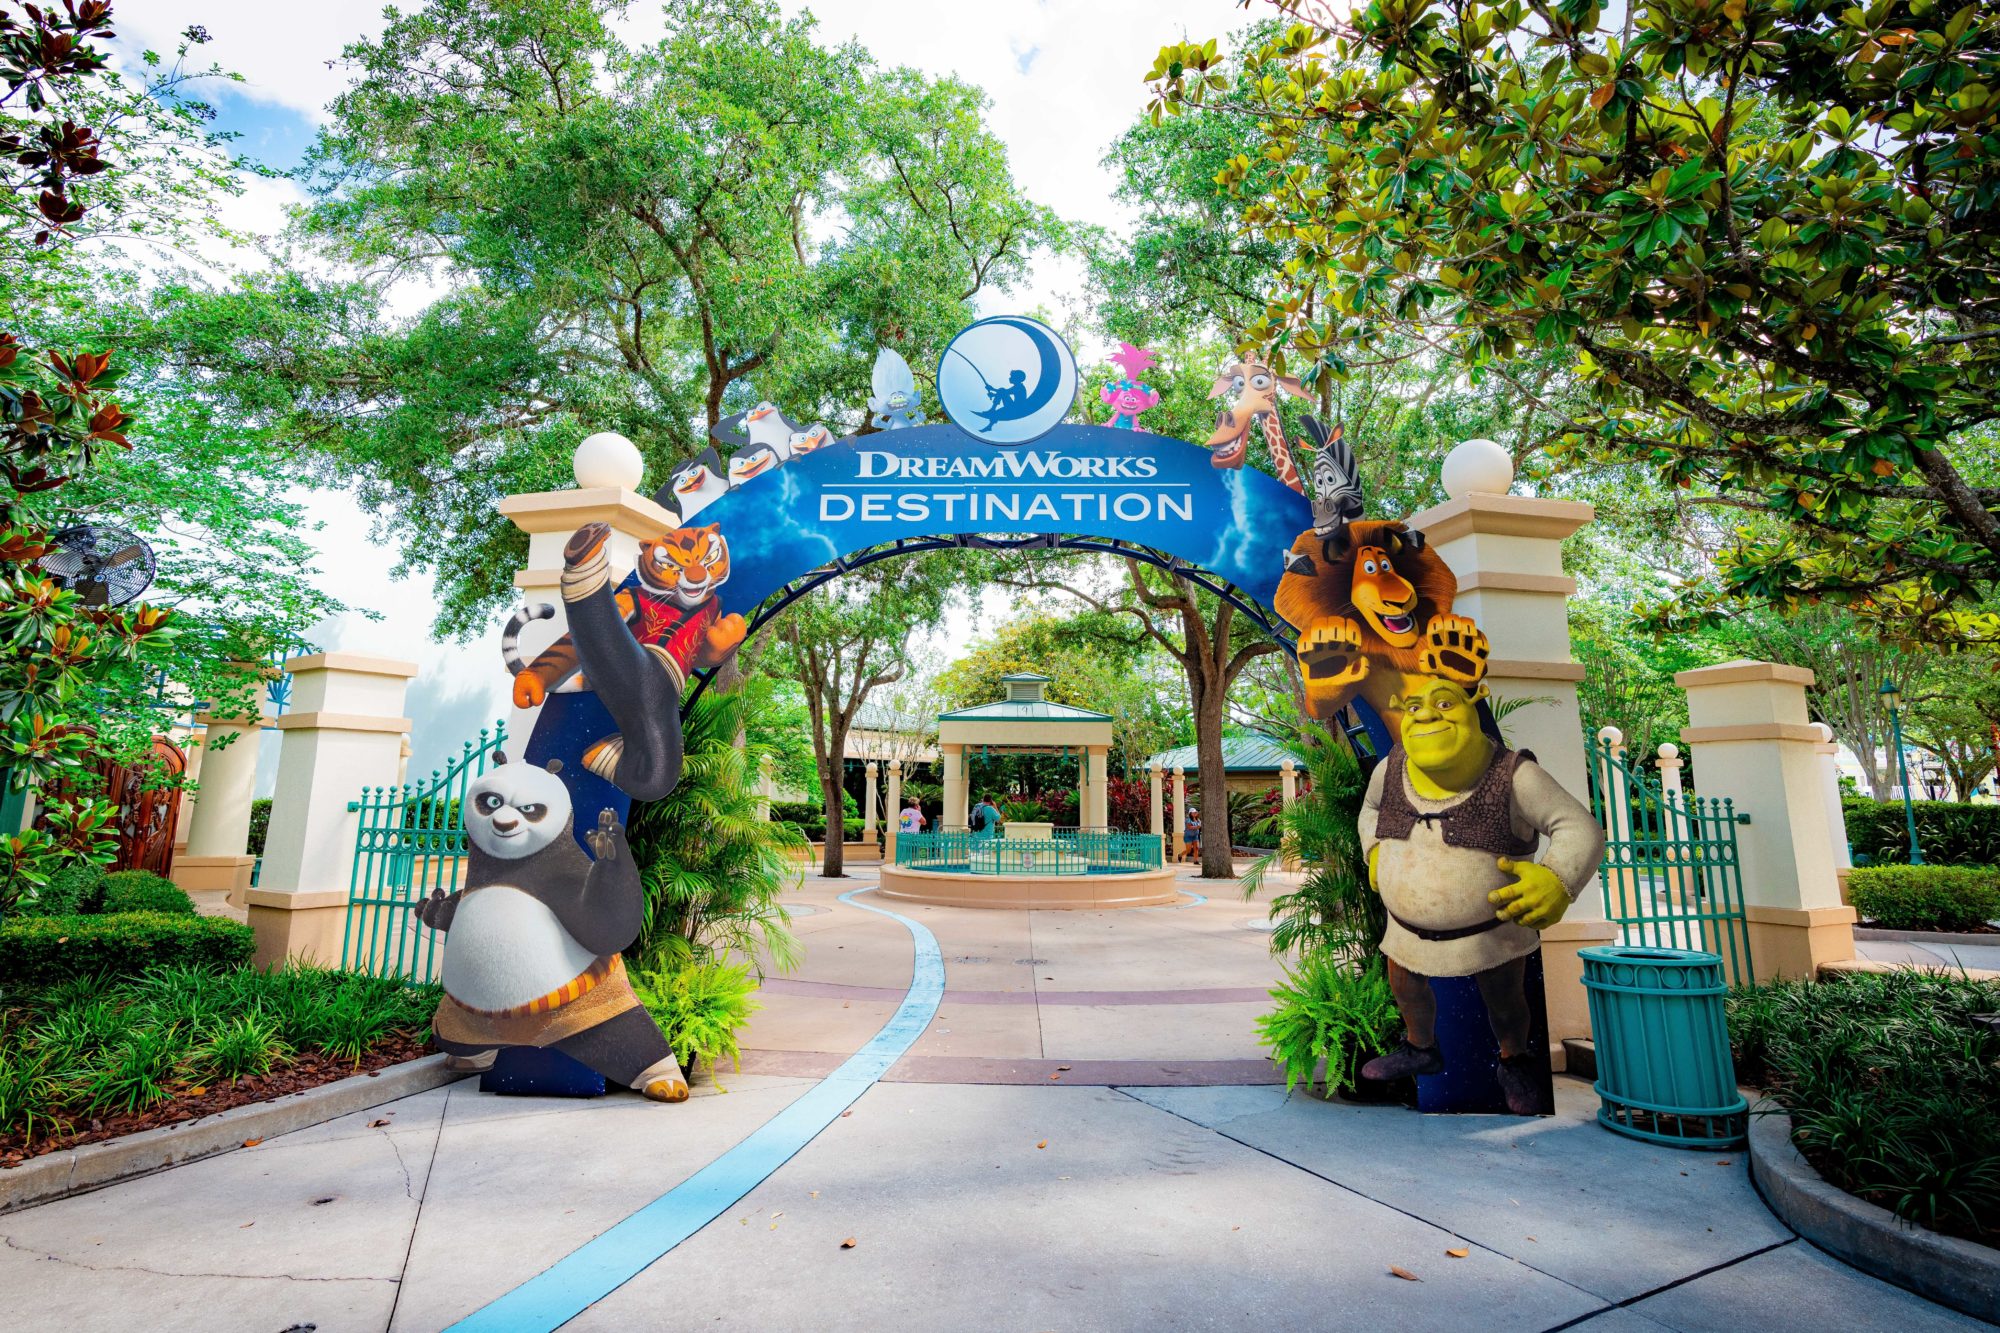 universal studios theme park logo